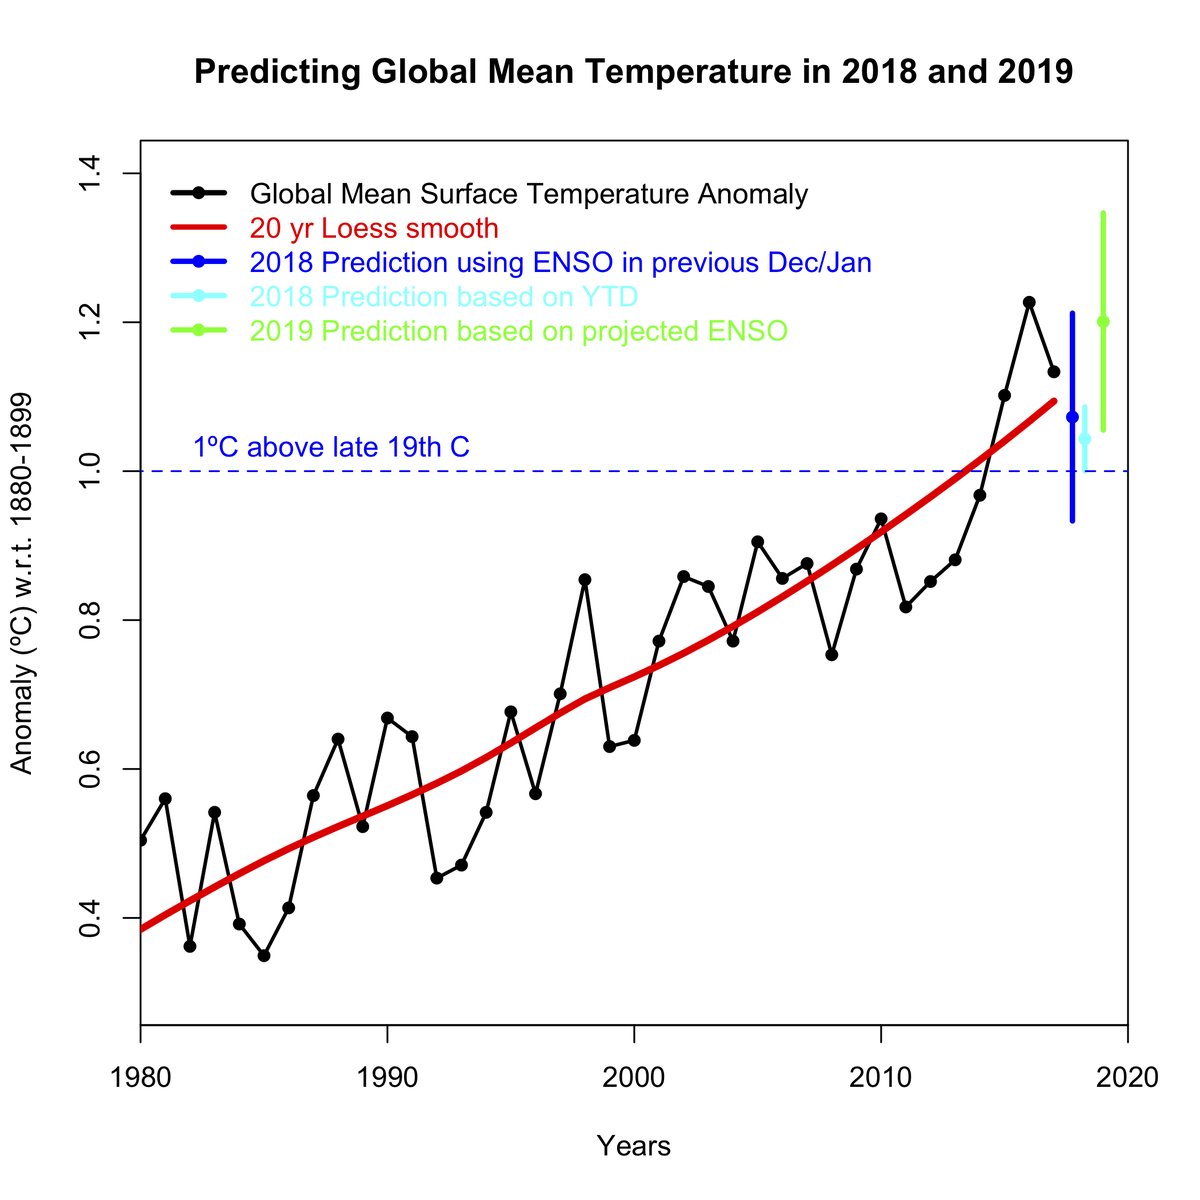 Nasa Global Temperature Chart